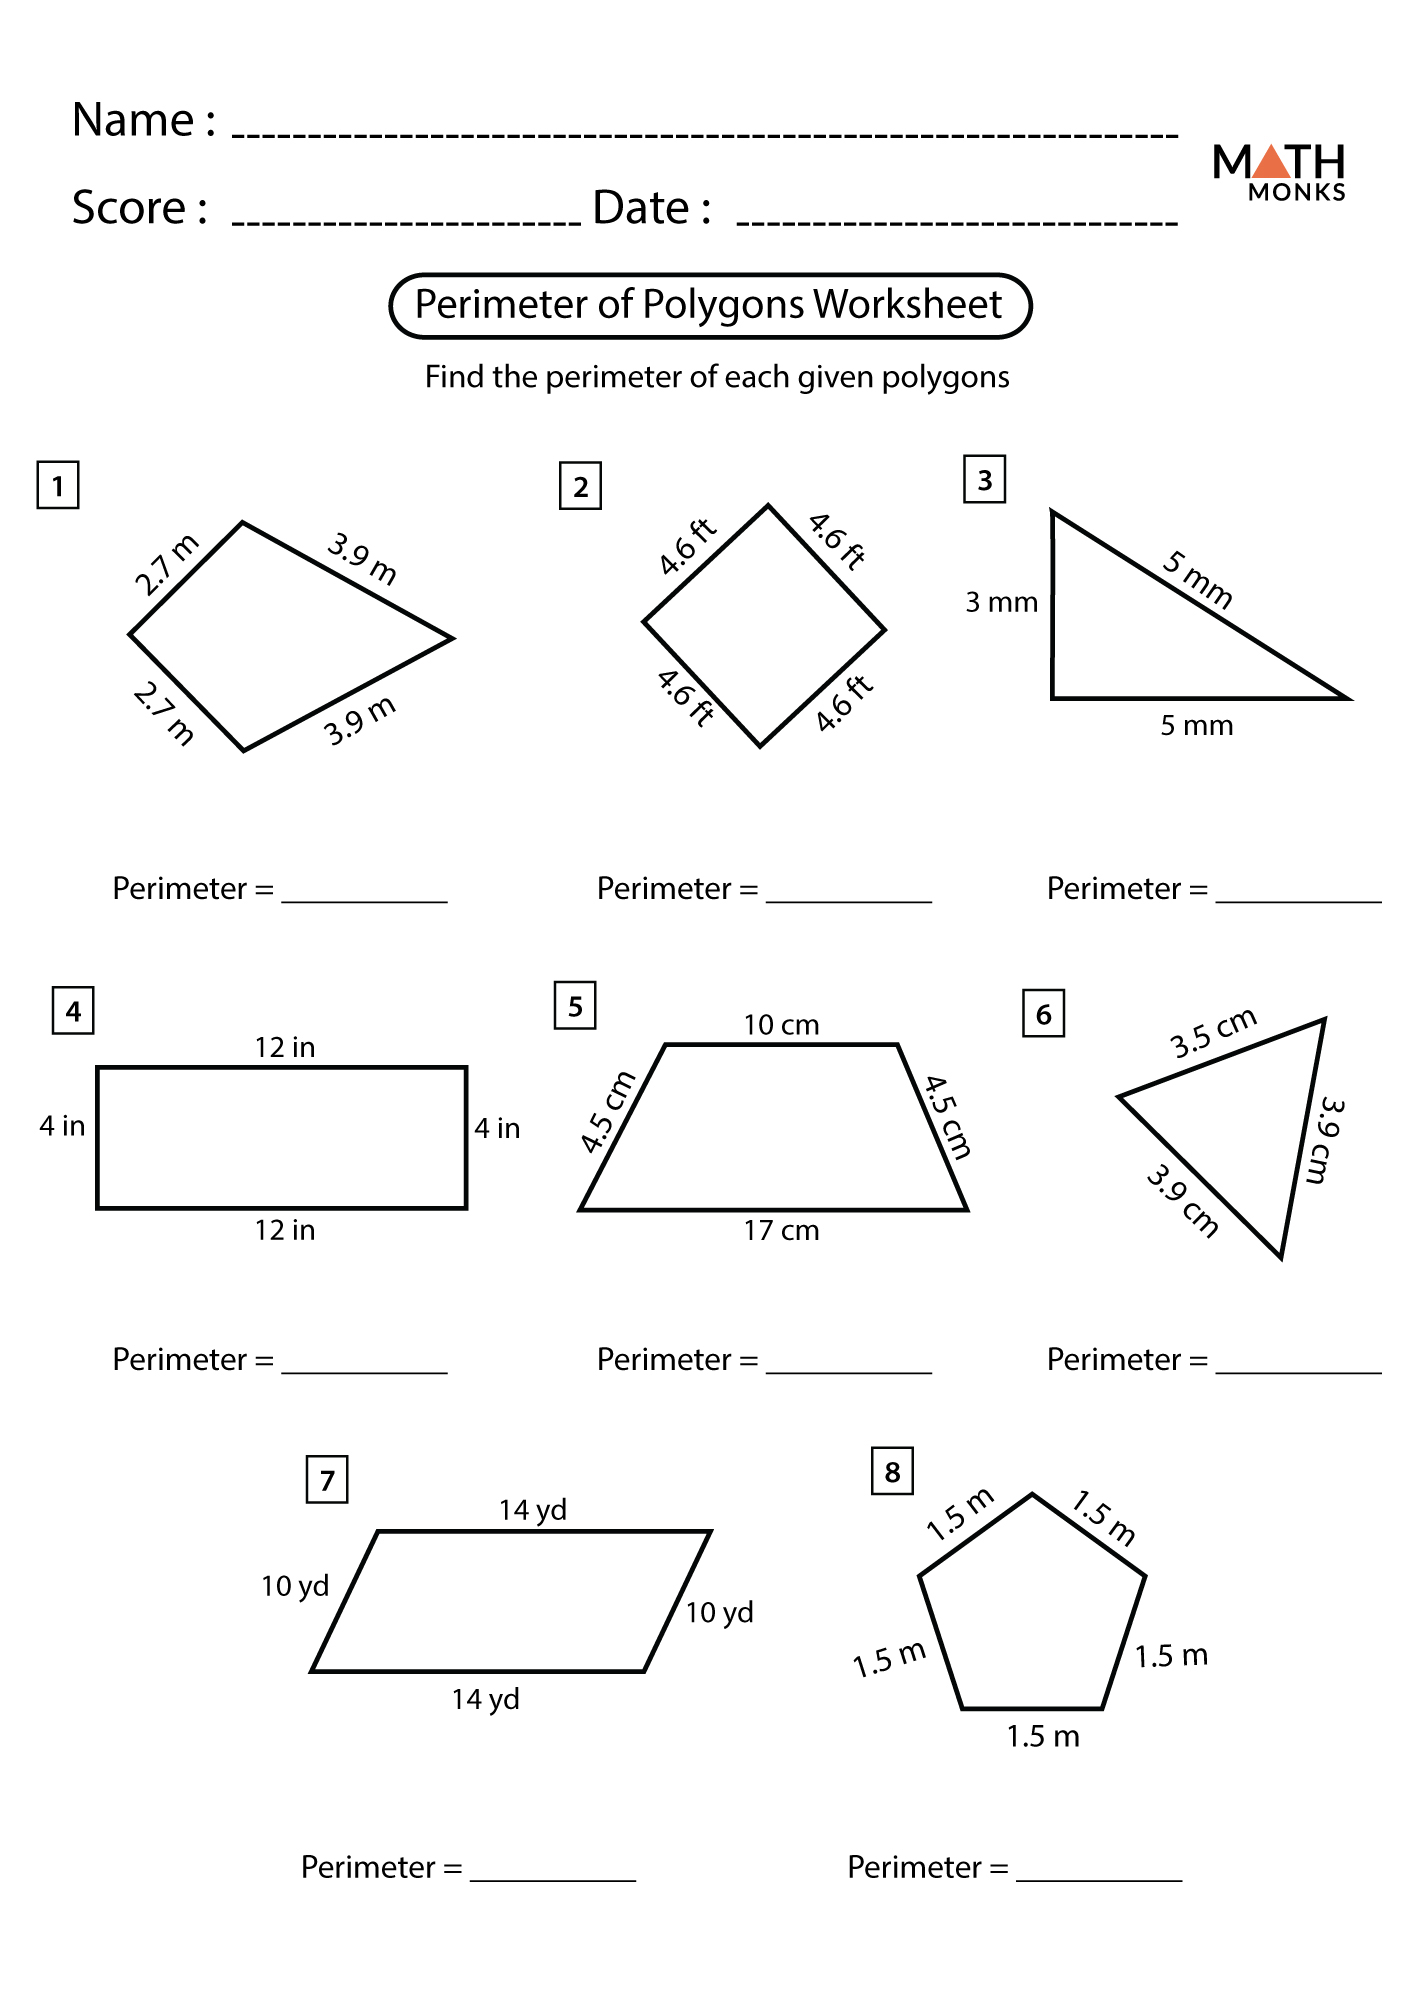 Fern Sheets Geometry Polygons Worksheet Pdf Answers